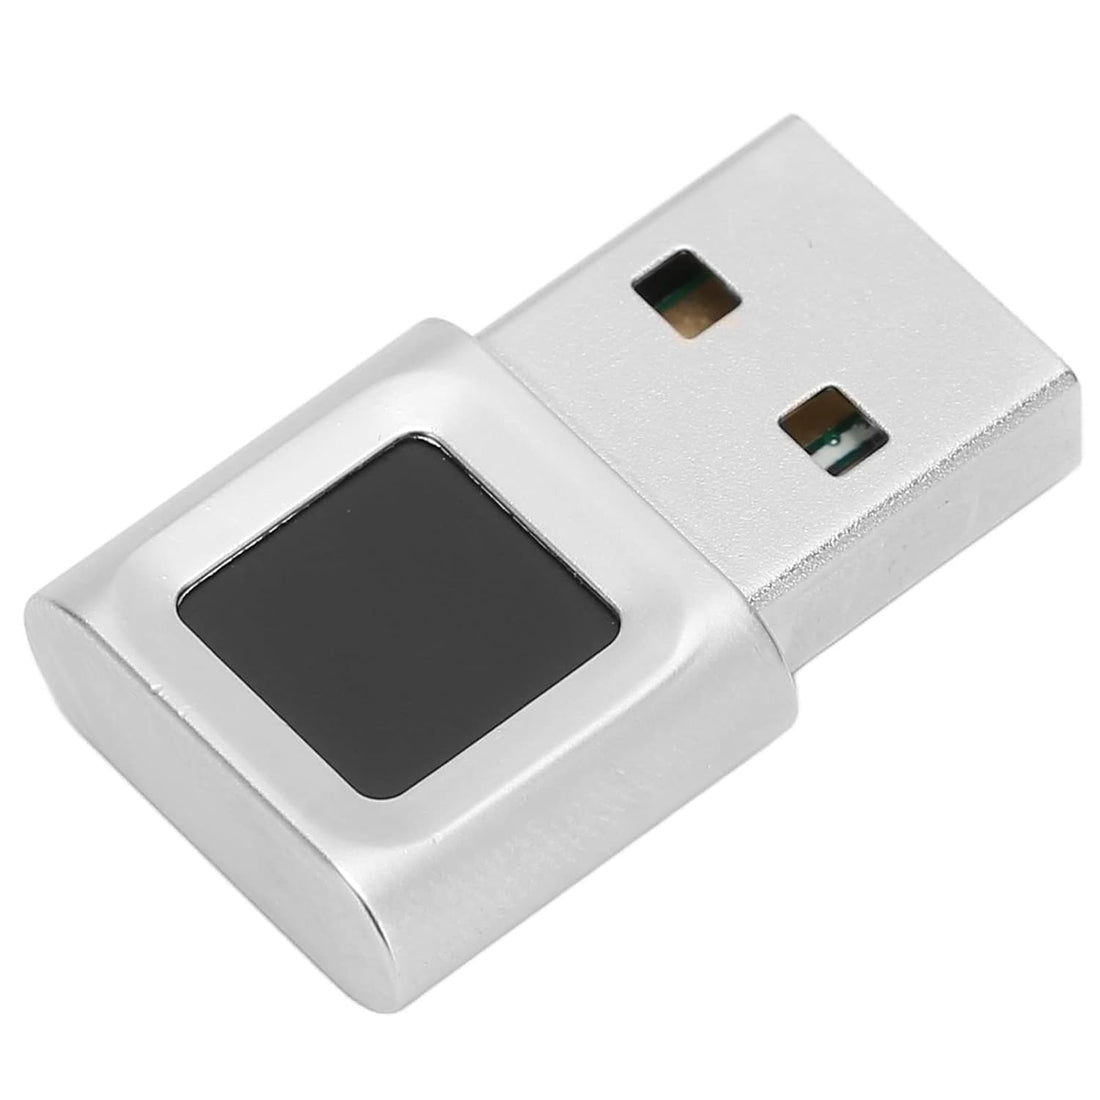 USB Fingerprint Reader for Windows Hello, Portable Security Key Biometric Fingerprint Scanner 0.5 Seconds 360 Degree Detection, for Win 10/11 32/64 Bits